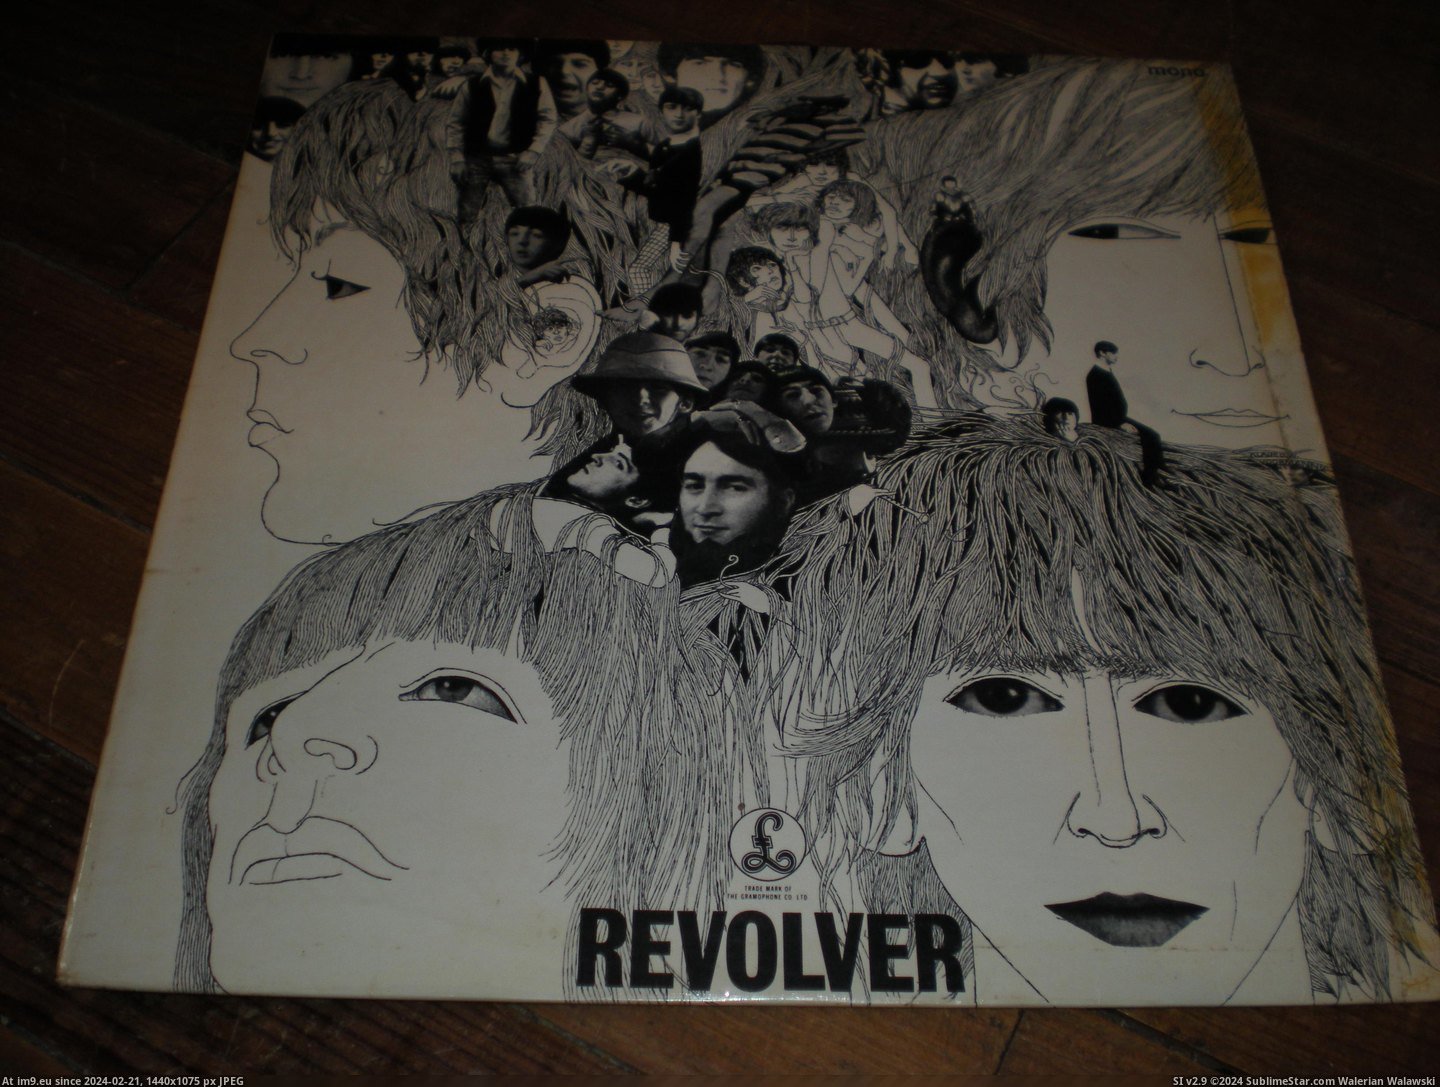  #Revolver  Revolver-2-2 6 Pic. (Изображение из альбом new 1))